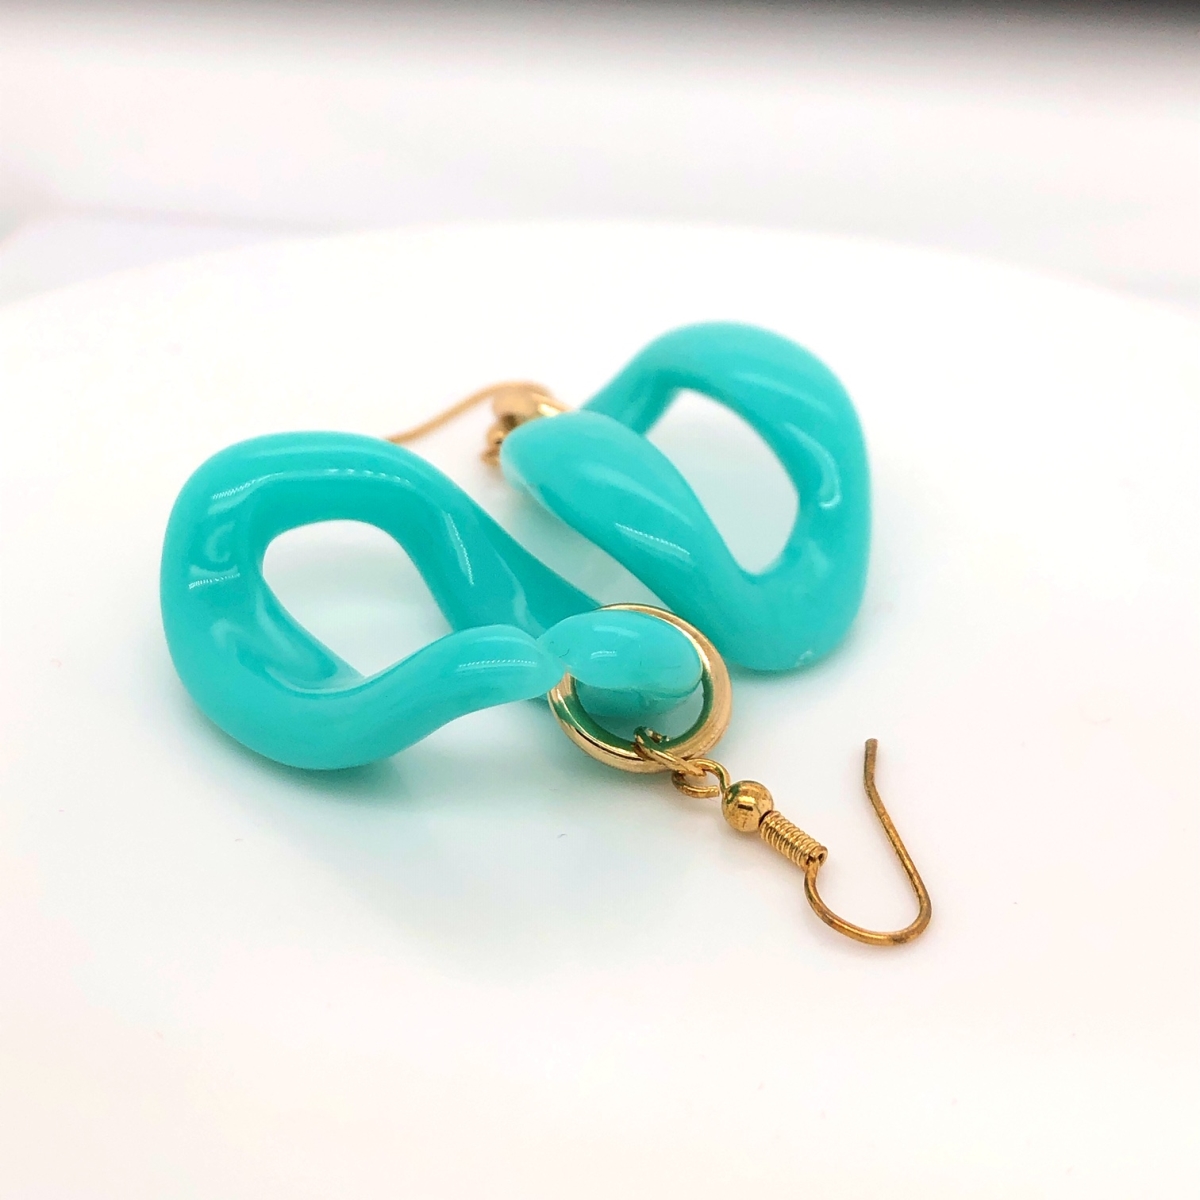 Qt0371ok-turquoise-pcd Fun Fashion Earrings - Turquoise